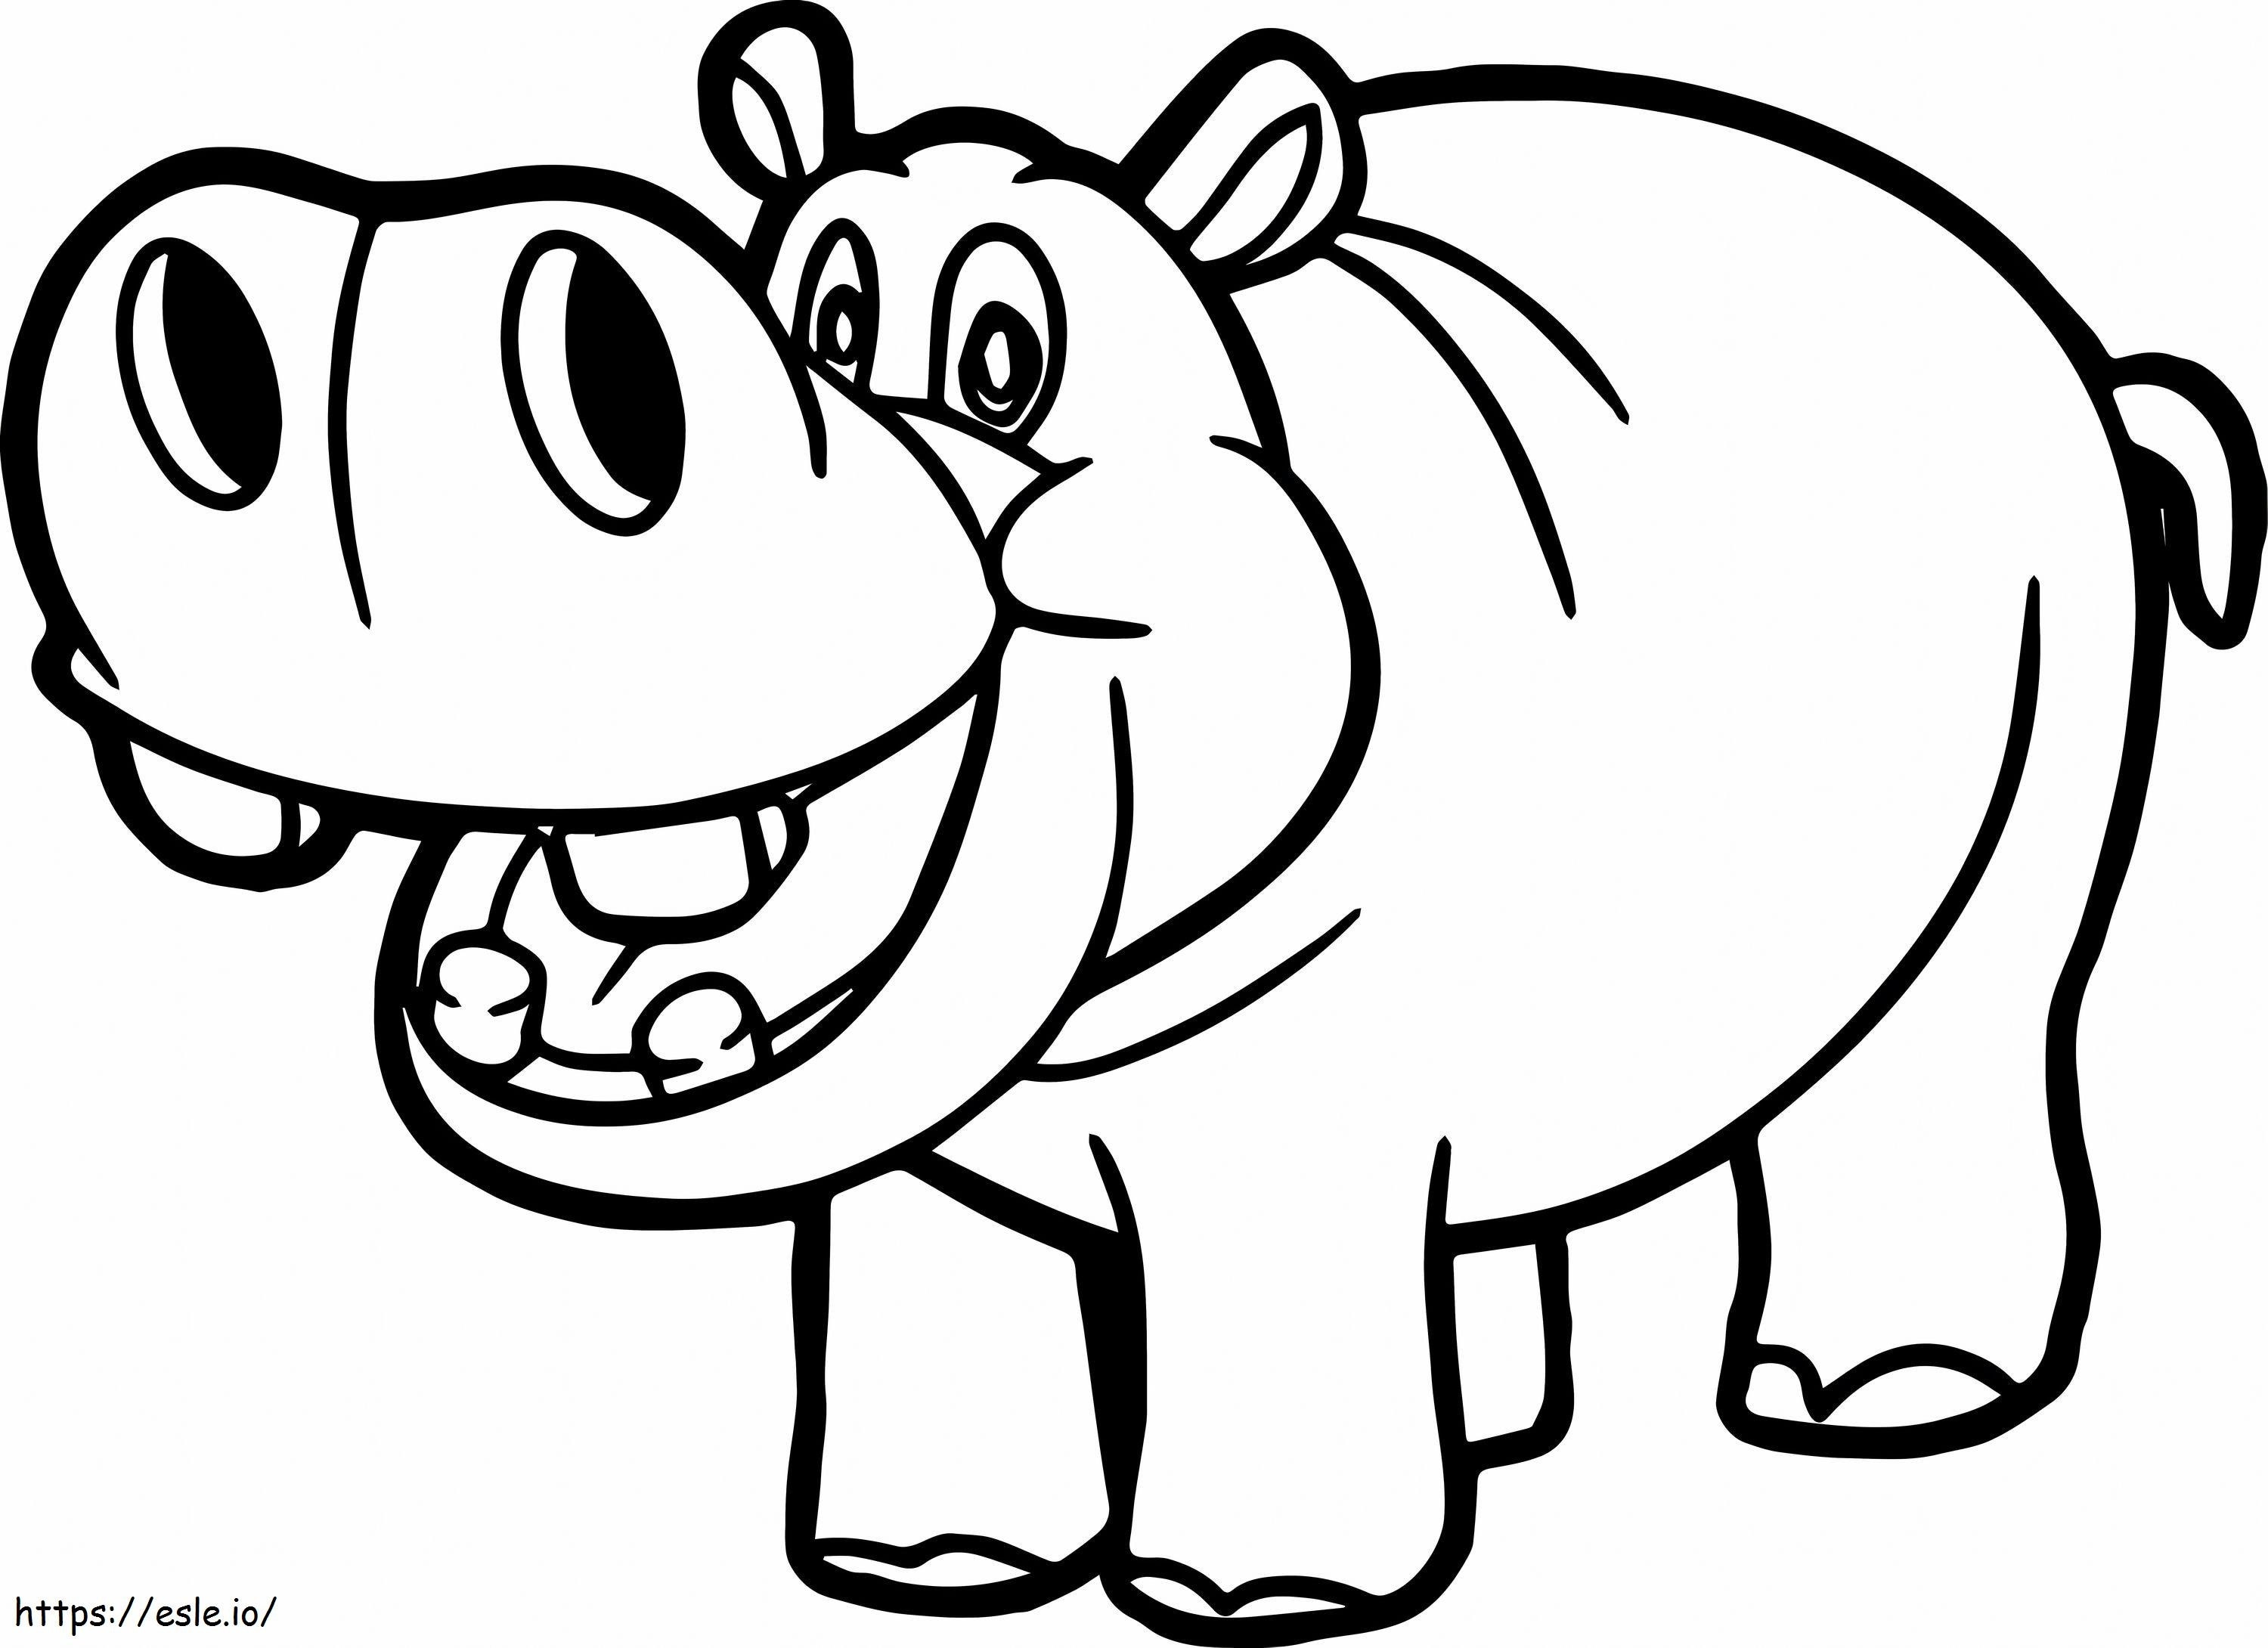 1548128583 Hippopotamuses Lüks Hippo Anahat Çizimi, Getdrawings Of Hippopotamuses boyama